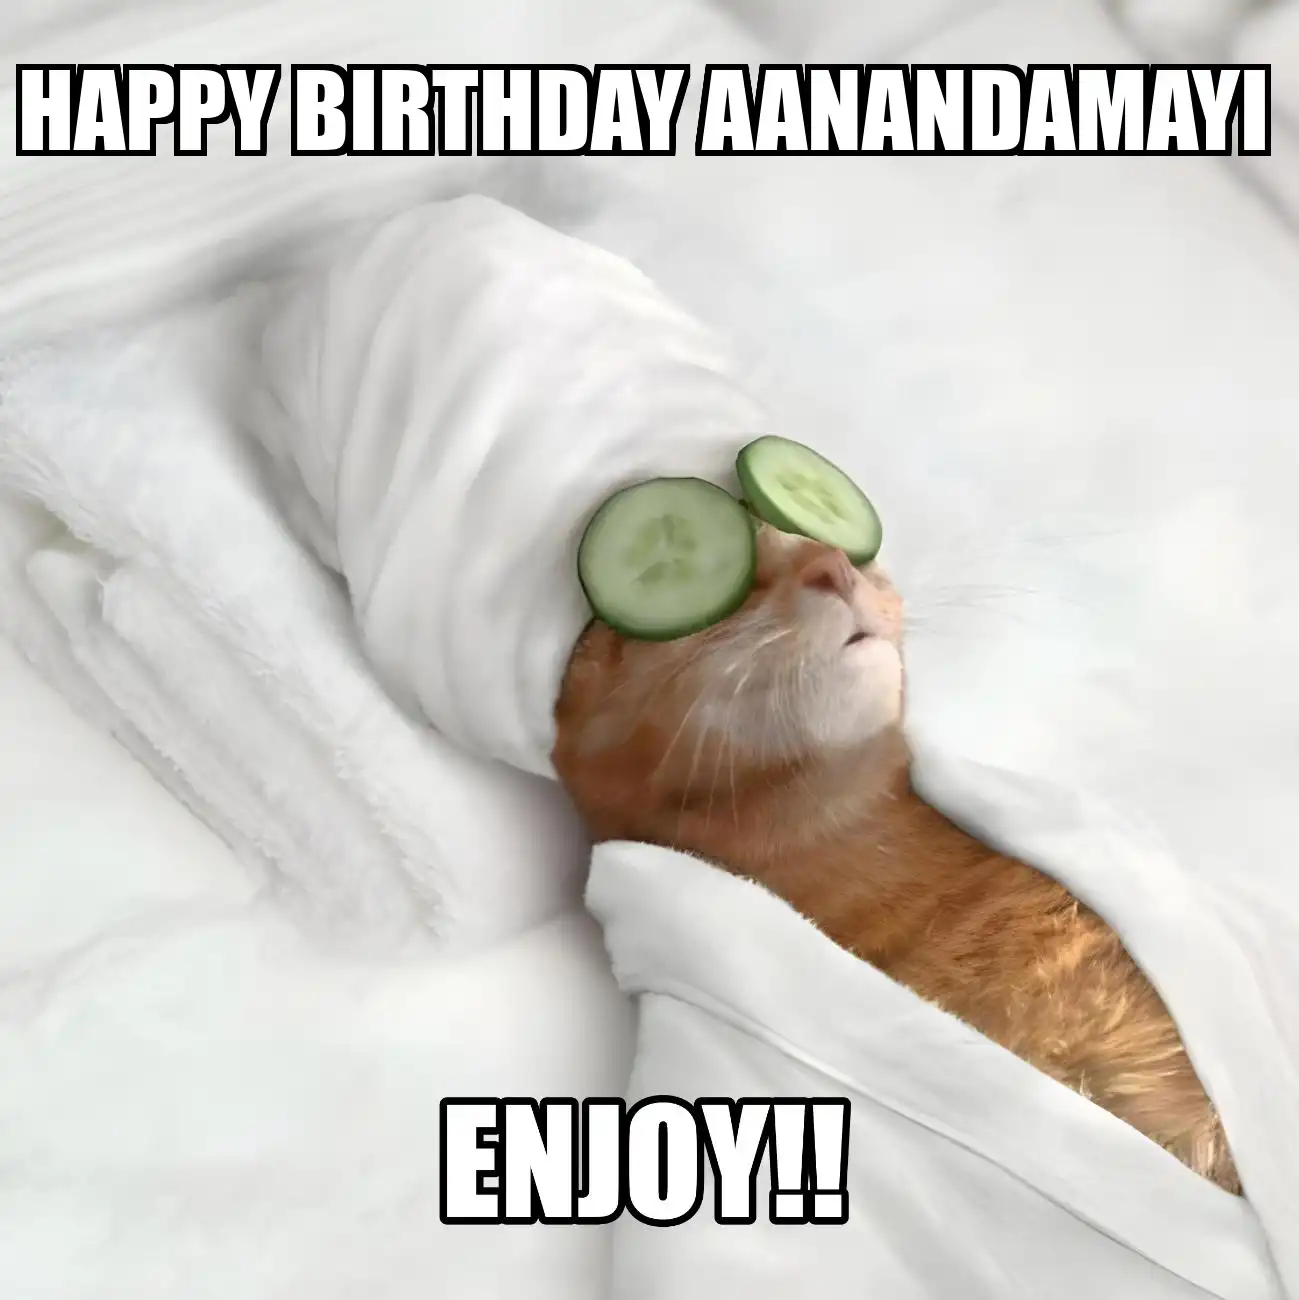 Happy Birthday Aanandamayi Enjoy Cat Meme